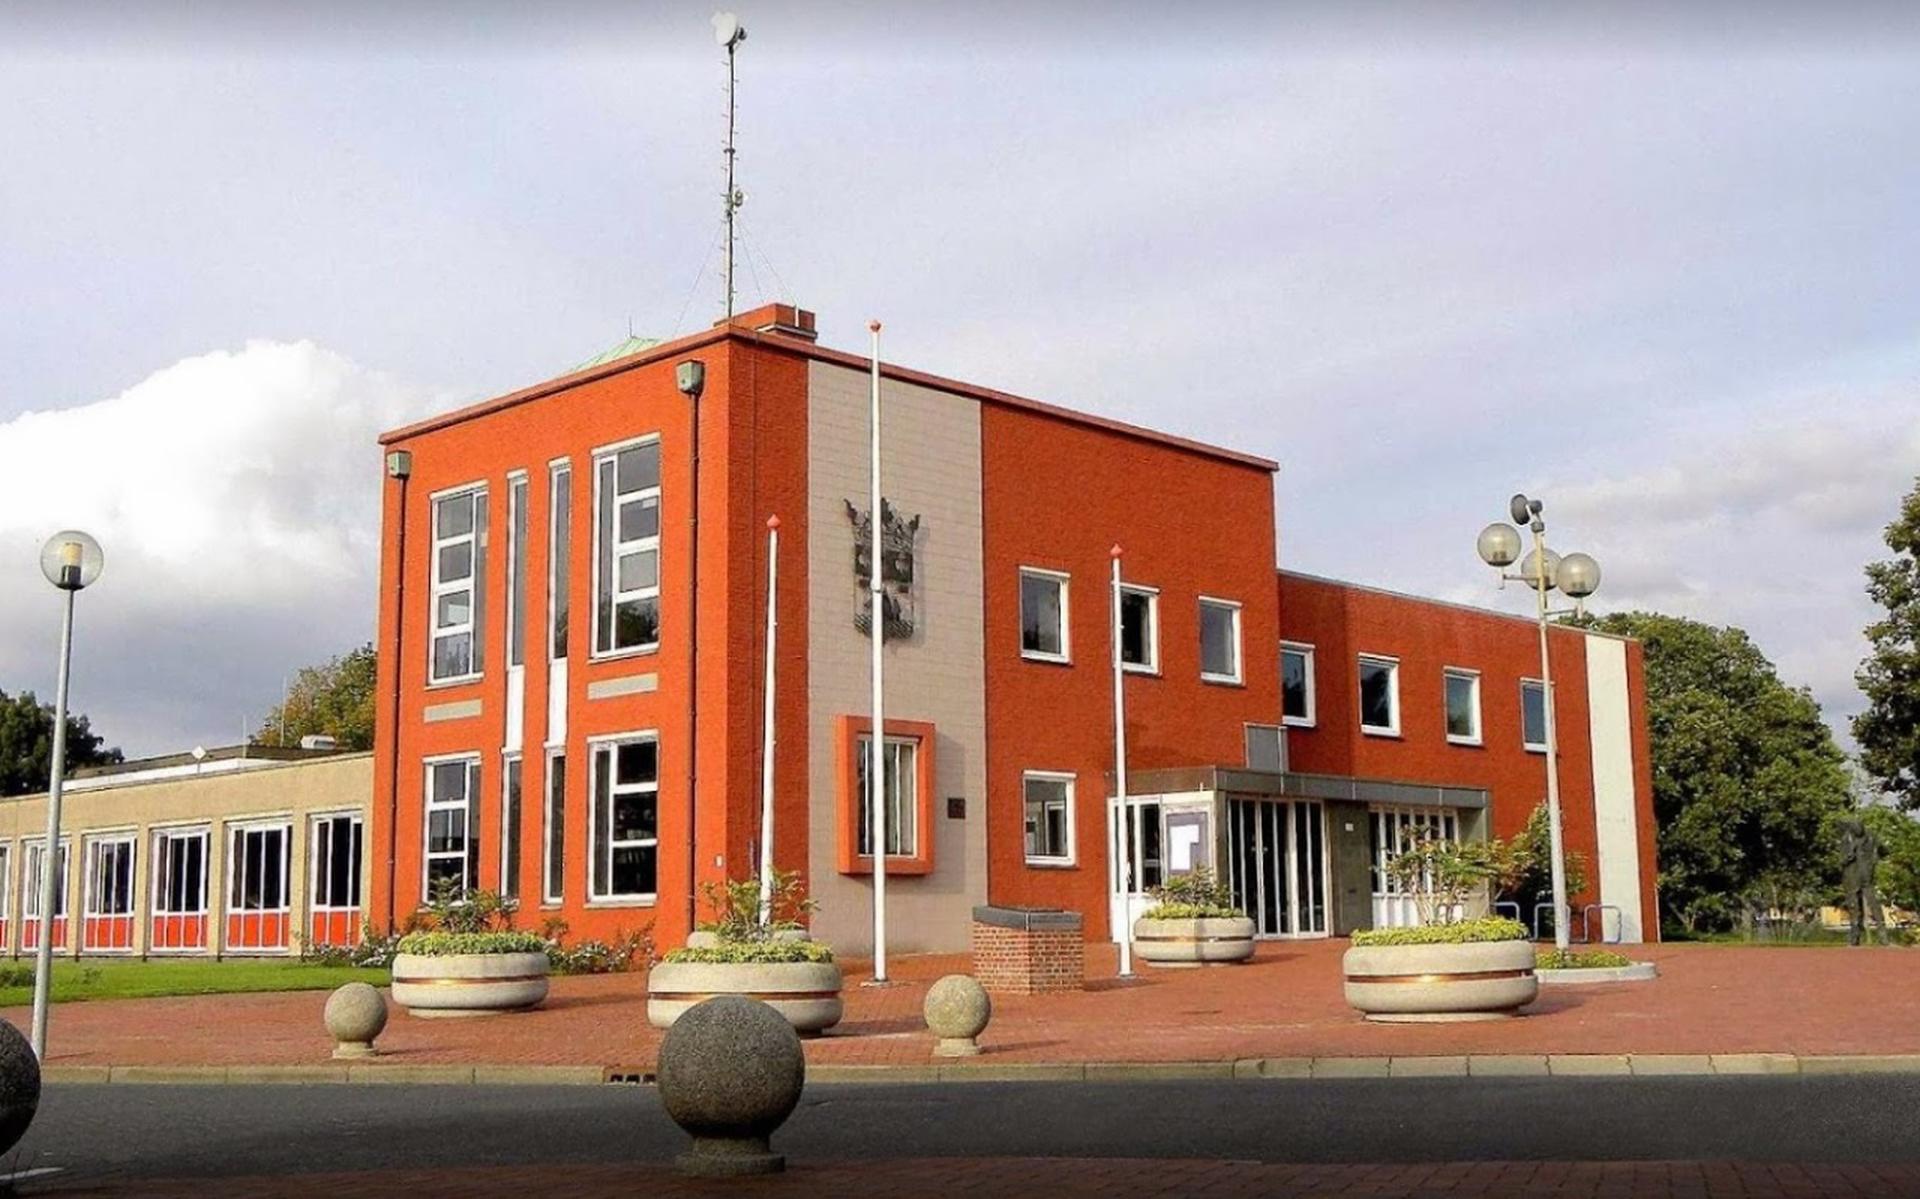 Het gemeentehuis van Pekela.